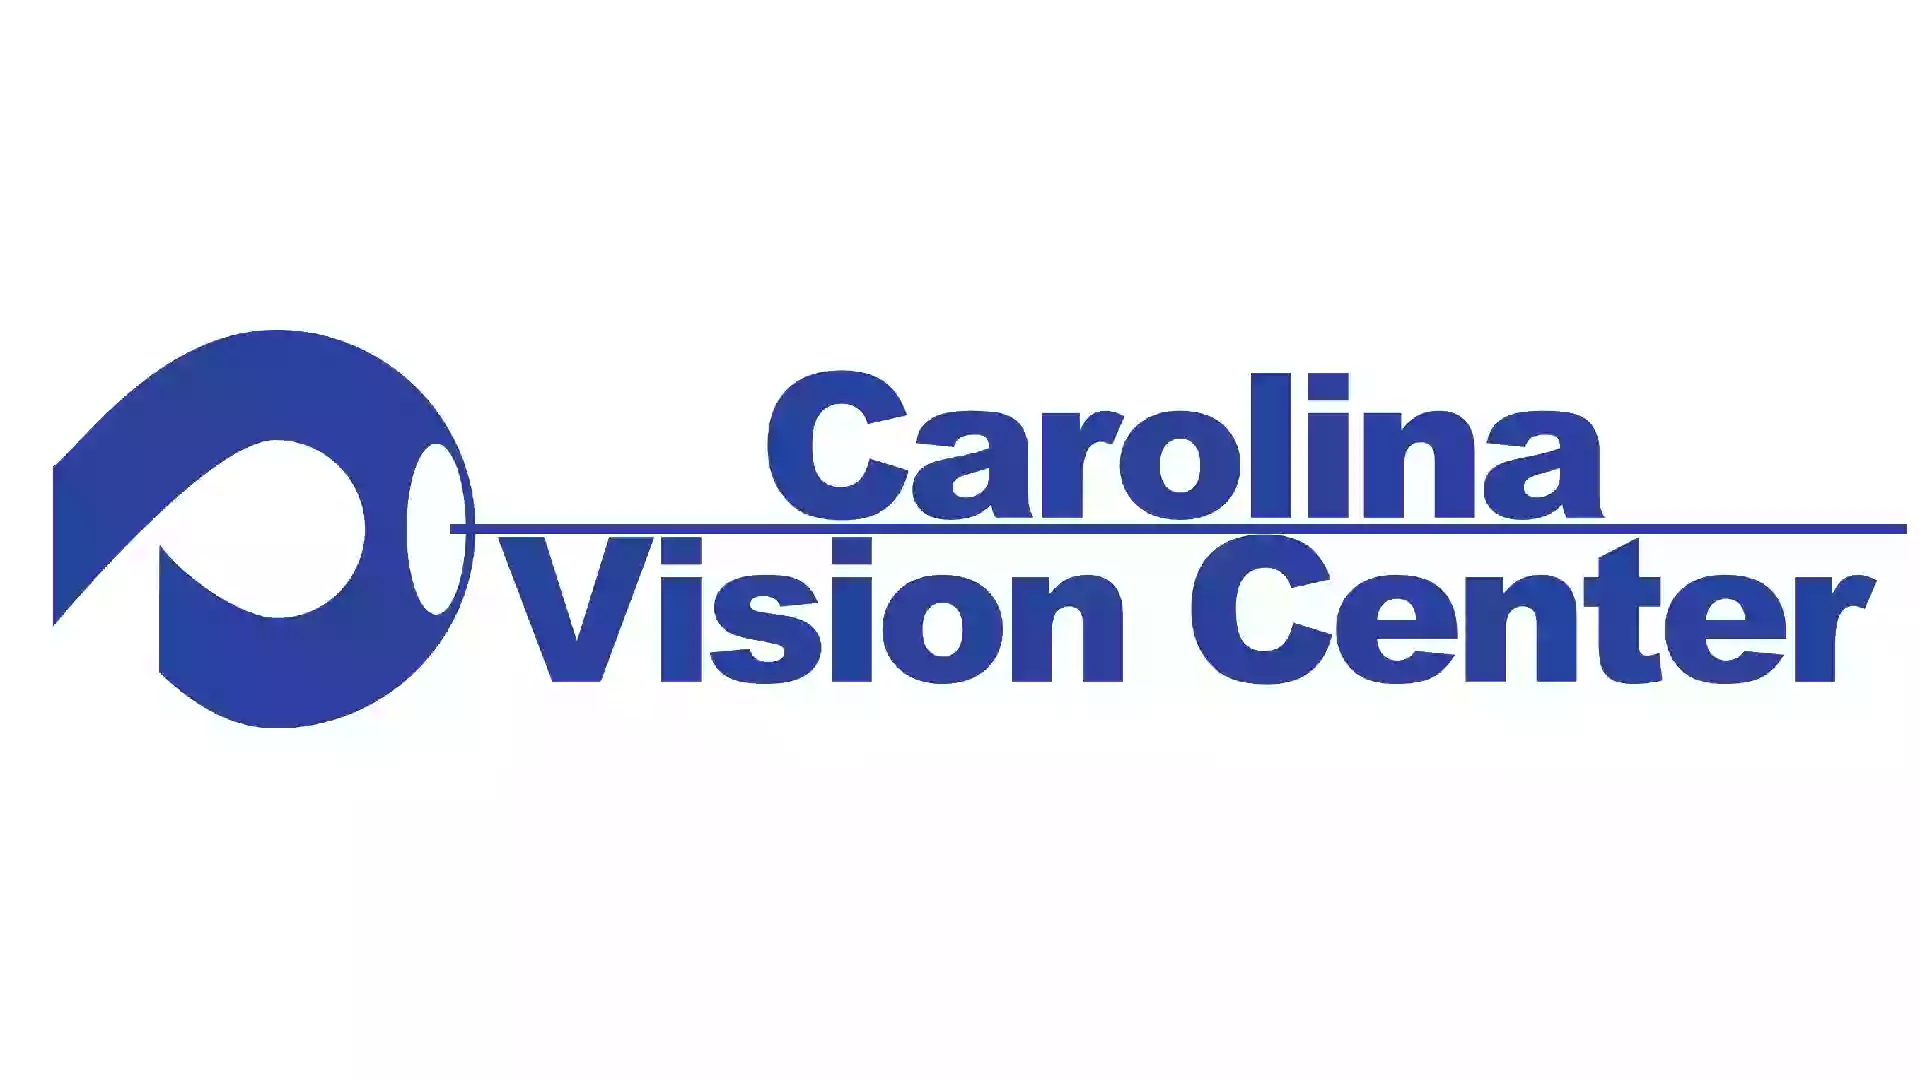 Carolina Vision Center